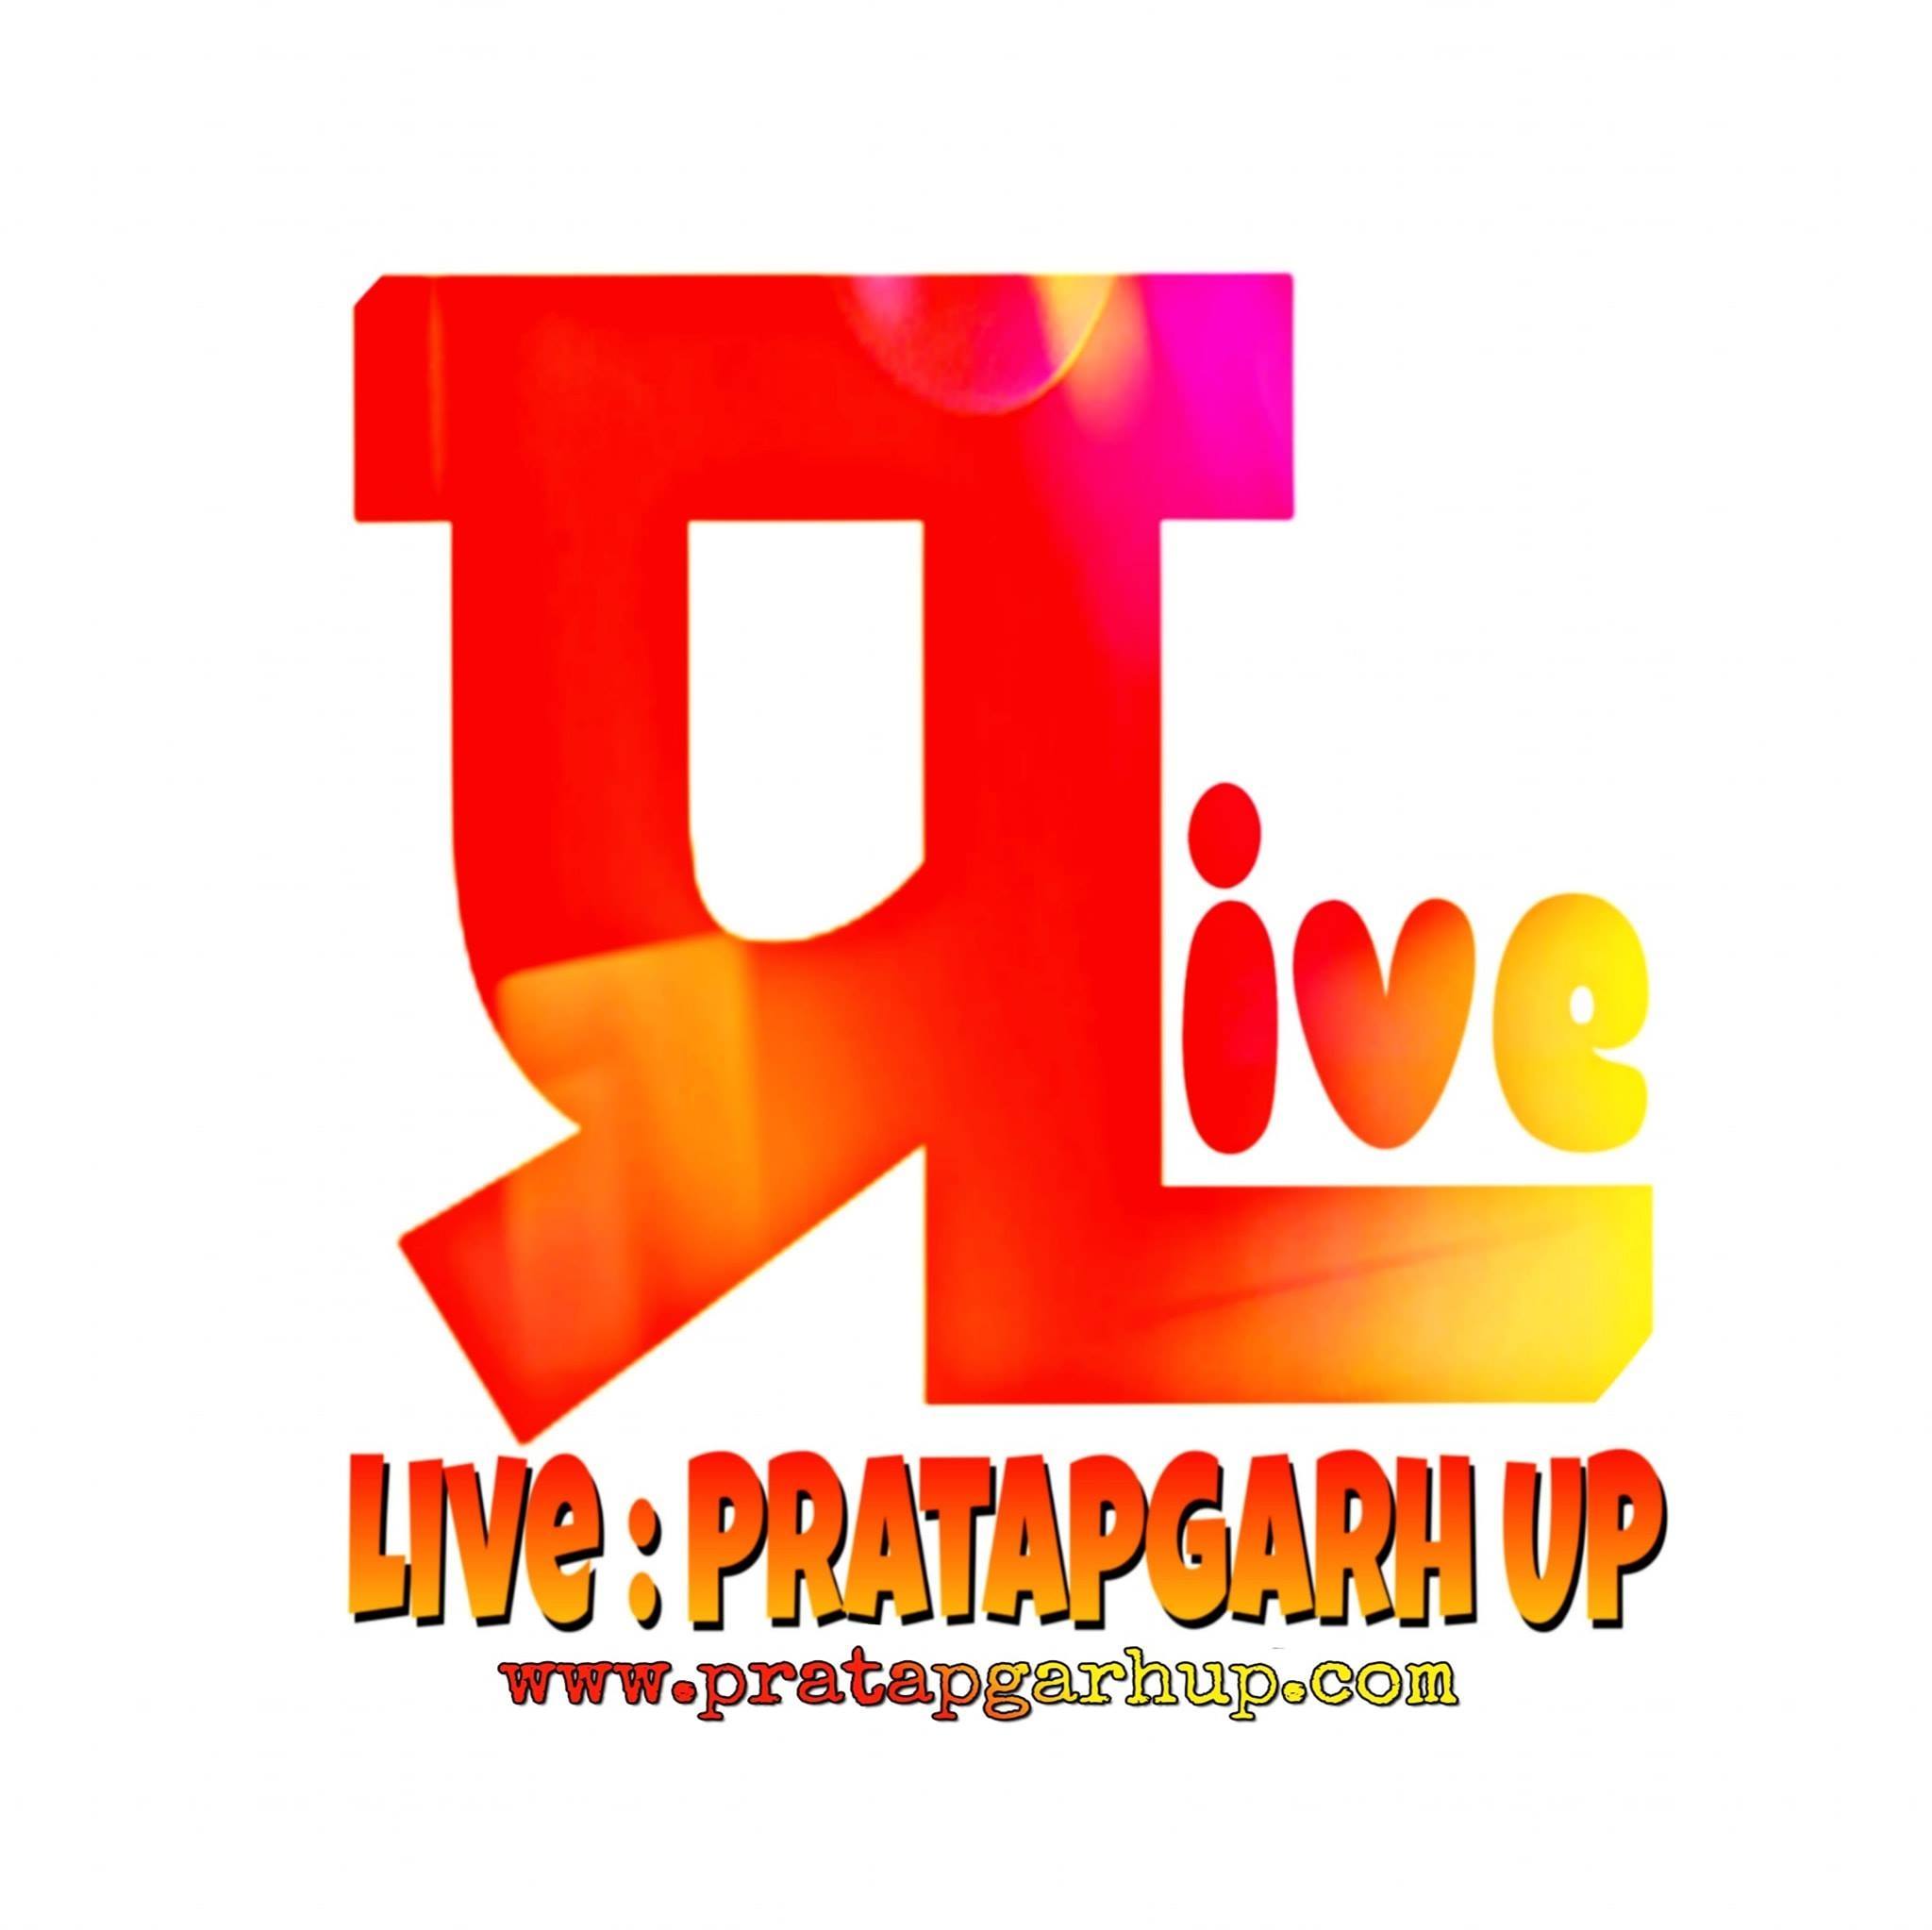 Live : Pratapgarh UP|Architect|Professional Services